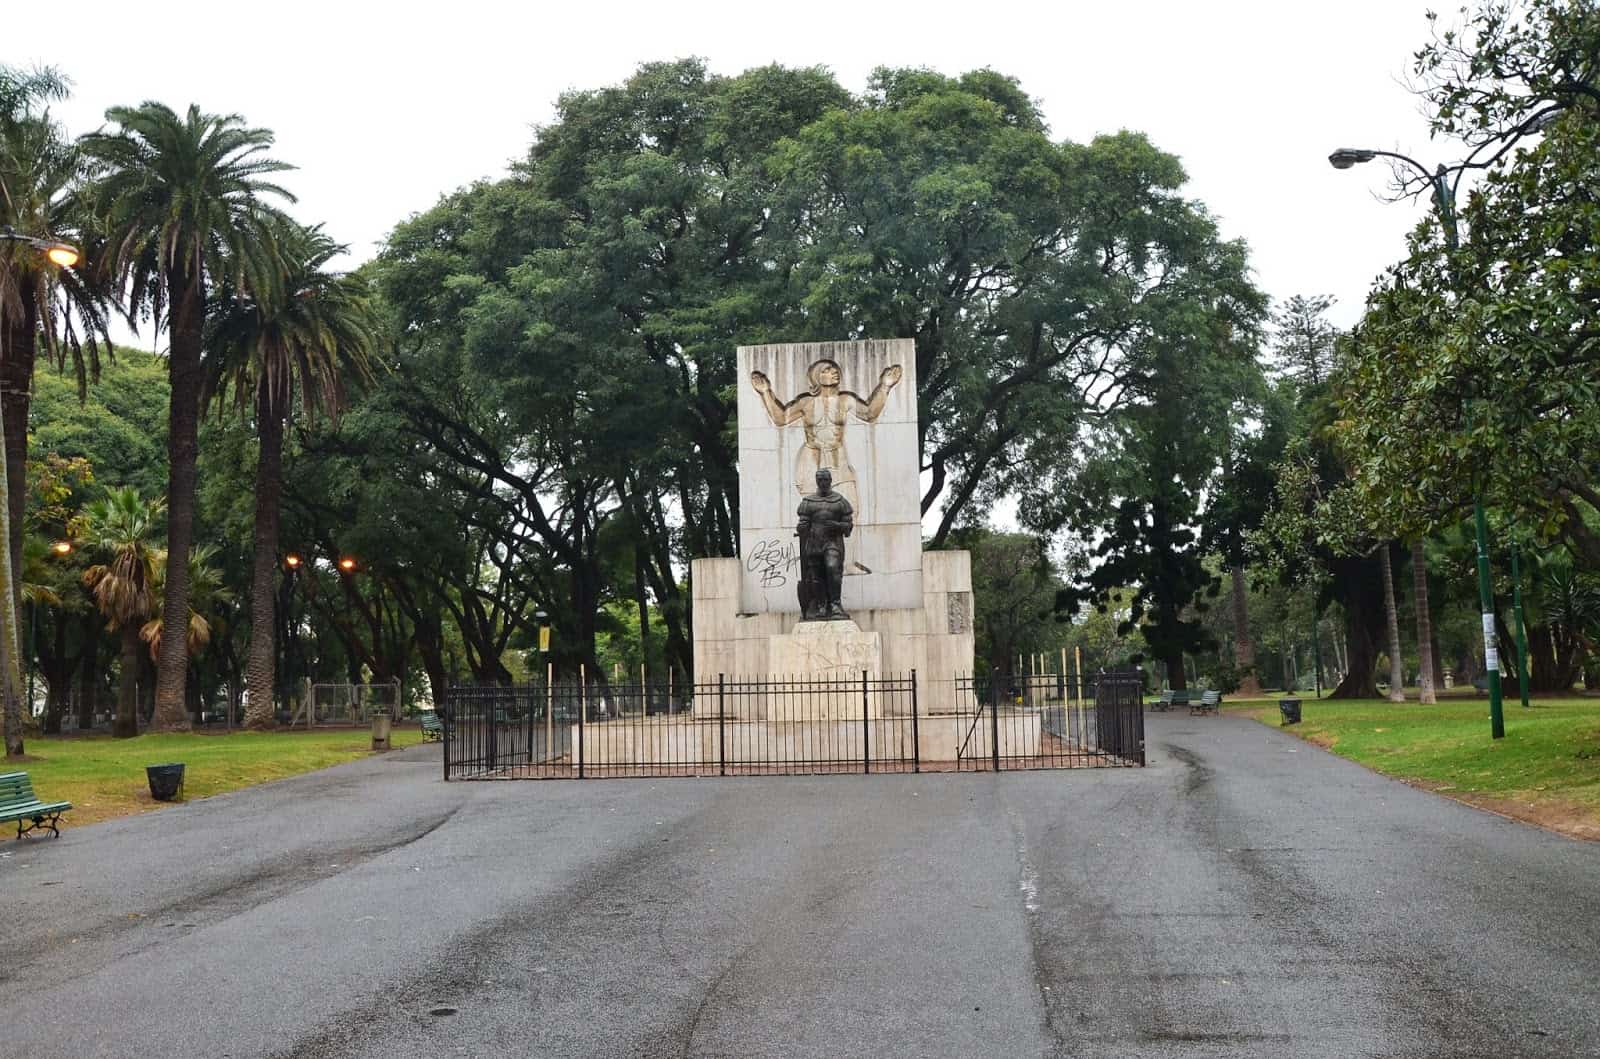 Pedro de Mendoza monument at Parque Paseo Lezama in San Telmo, Buenos Aires, Argentina